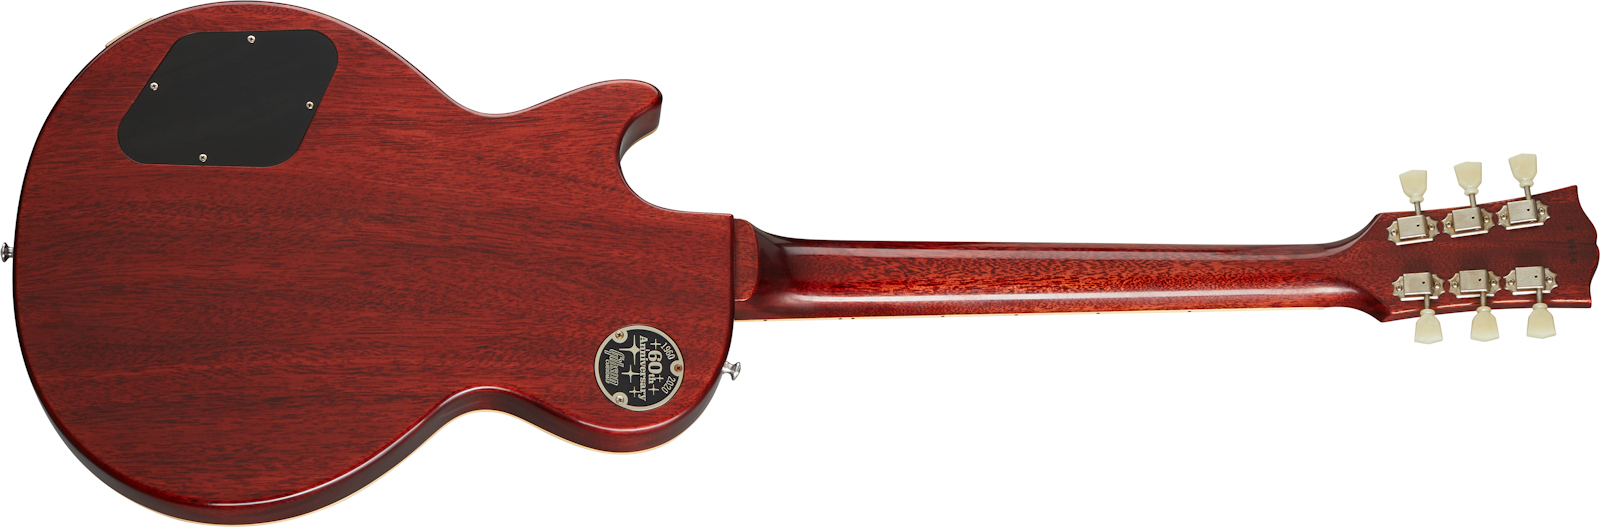 Gibson Custom Shop Les Paul Standard 1960 V1 60th Anniversary 2h Ht Rw - Vos Antiquity Burst - Single cut electric guitar - Variation 1